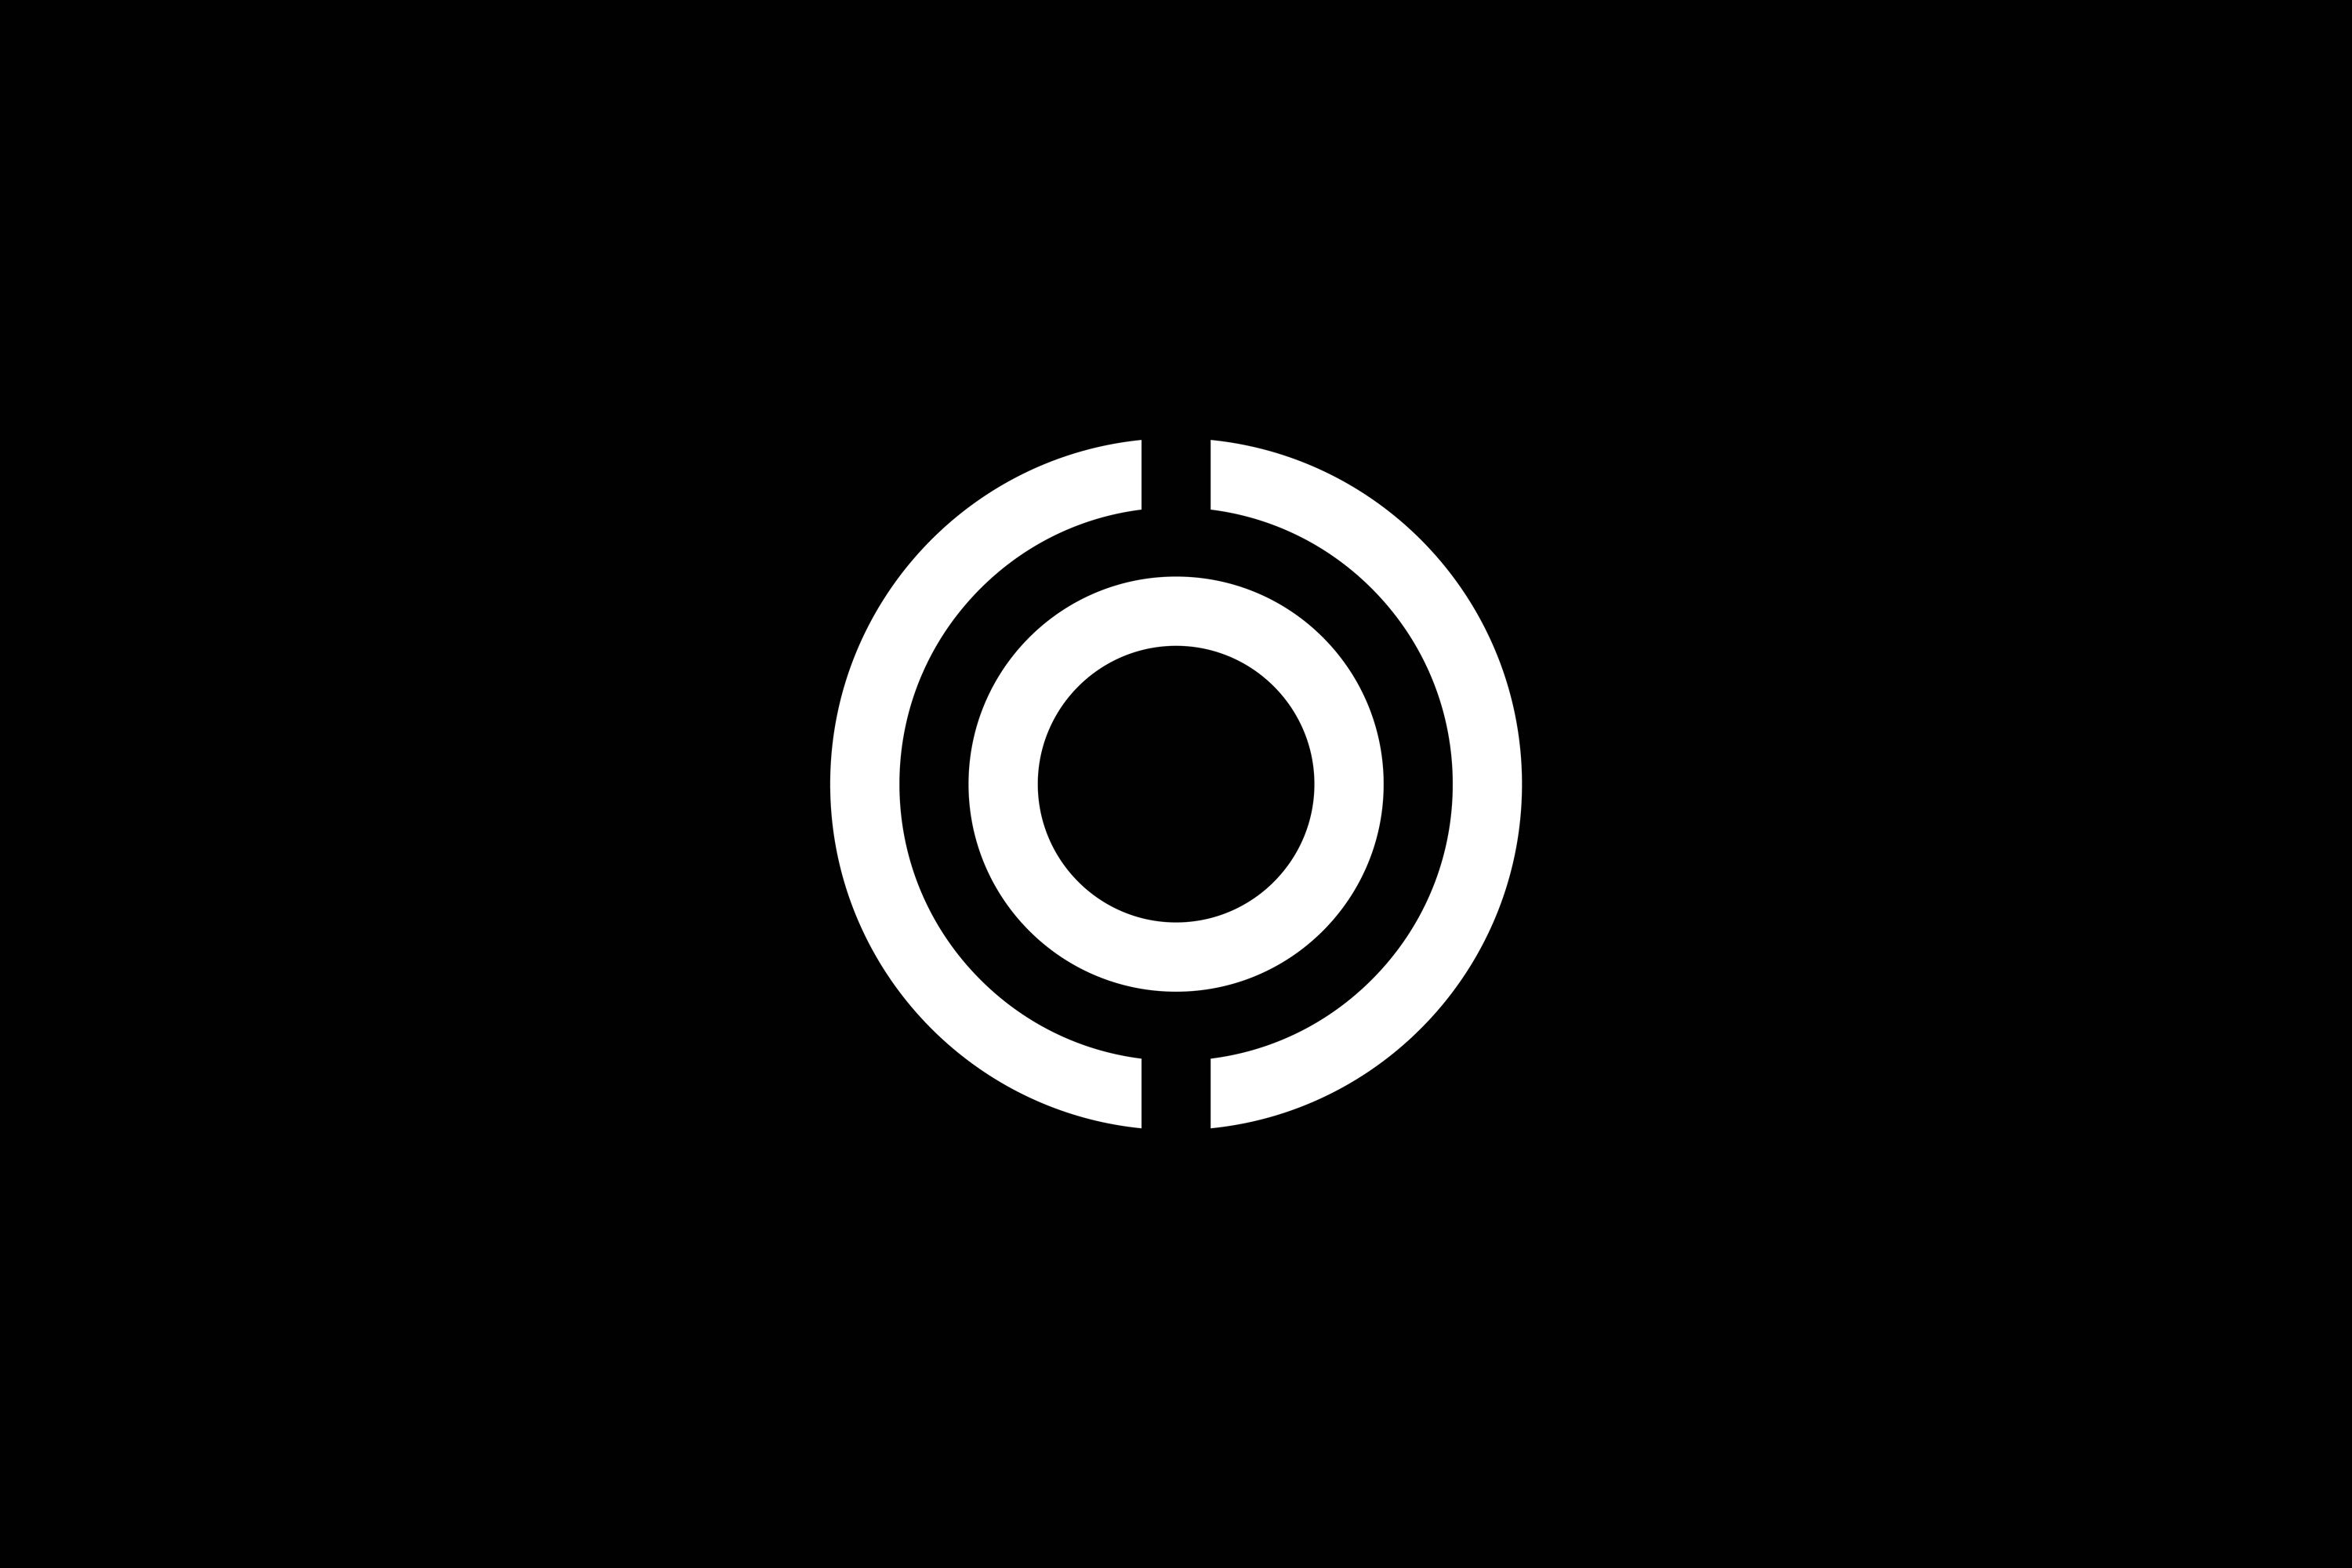 Osko Logo